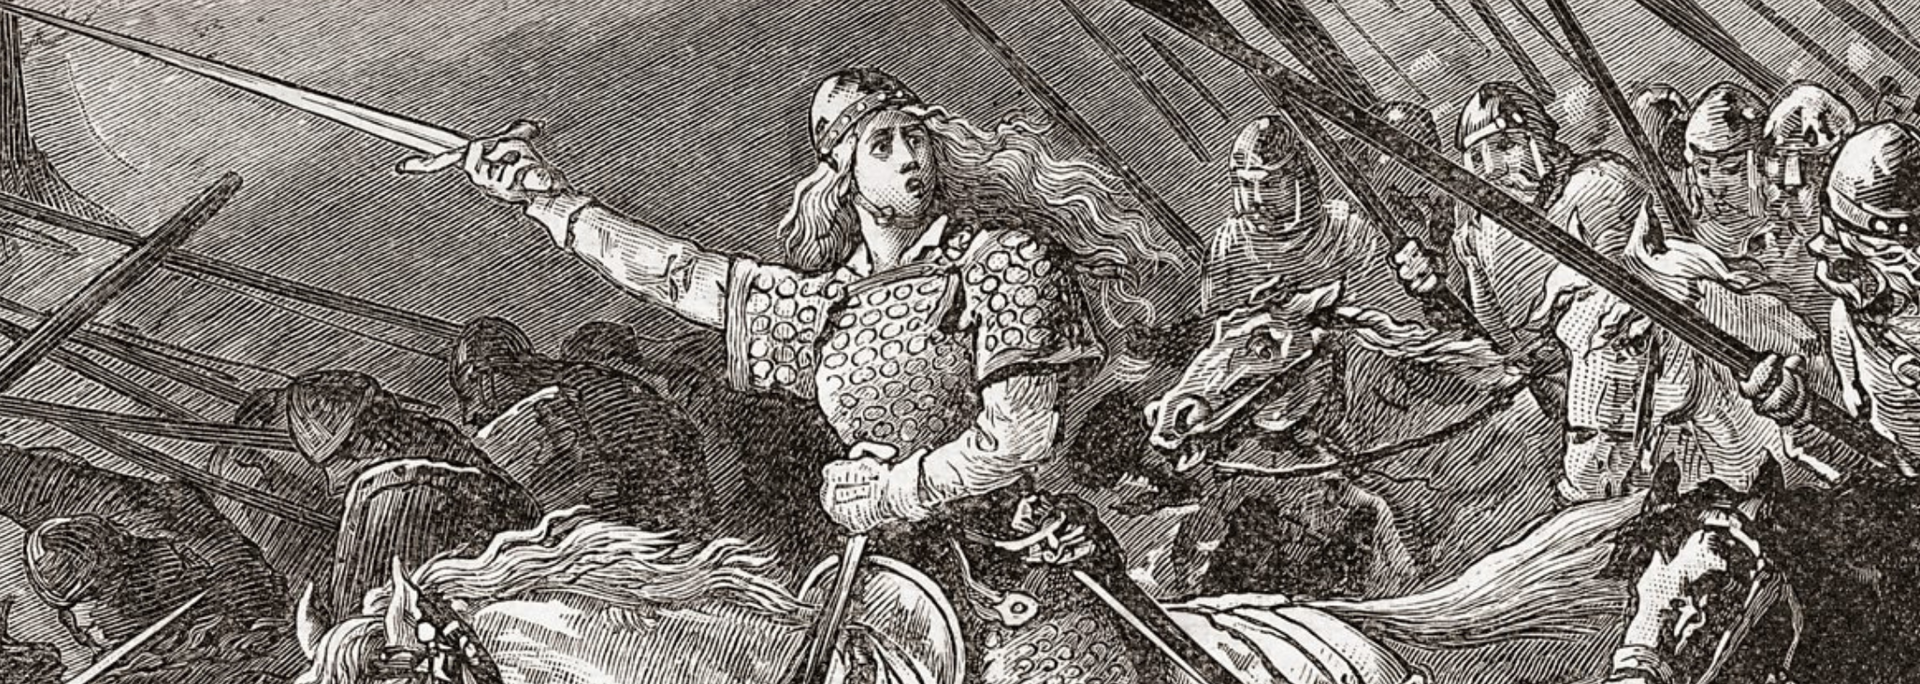 Picture of Queen Æthelflæd.